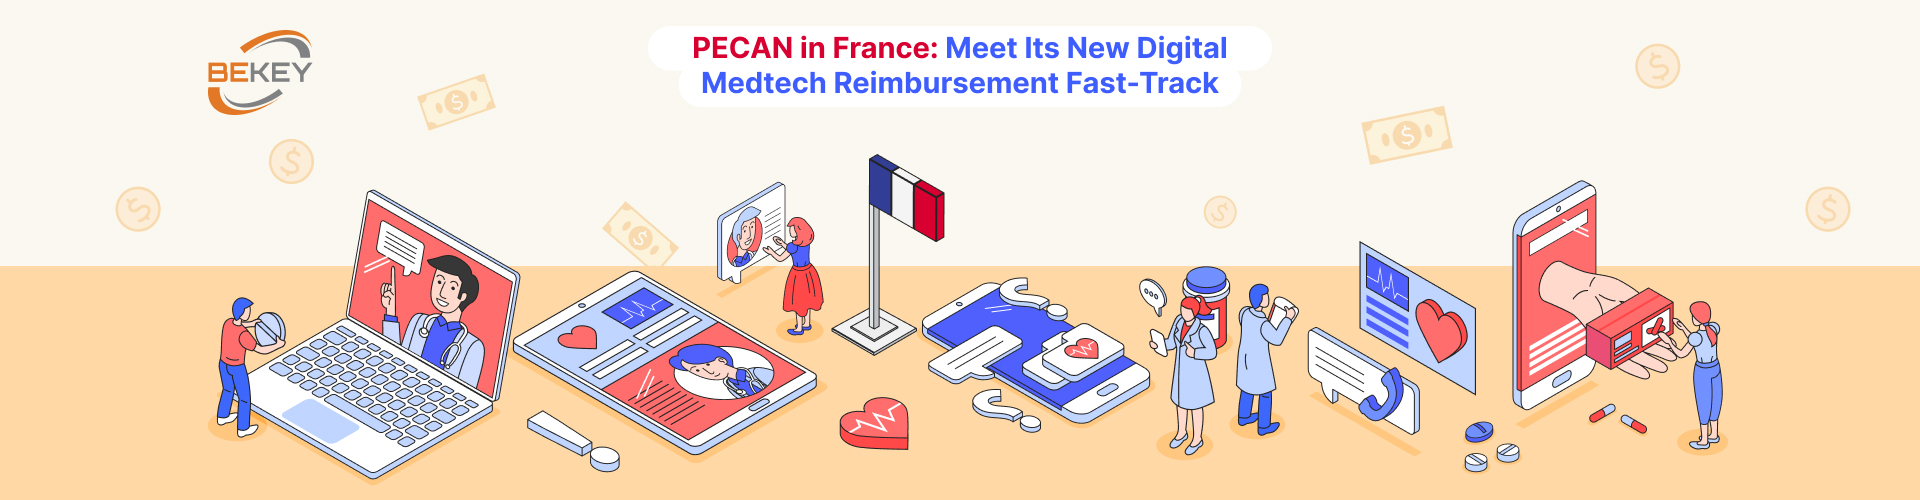 PECAN in France: Meet Its New Digital Medtech Reimbursement Fast-Track - image